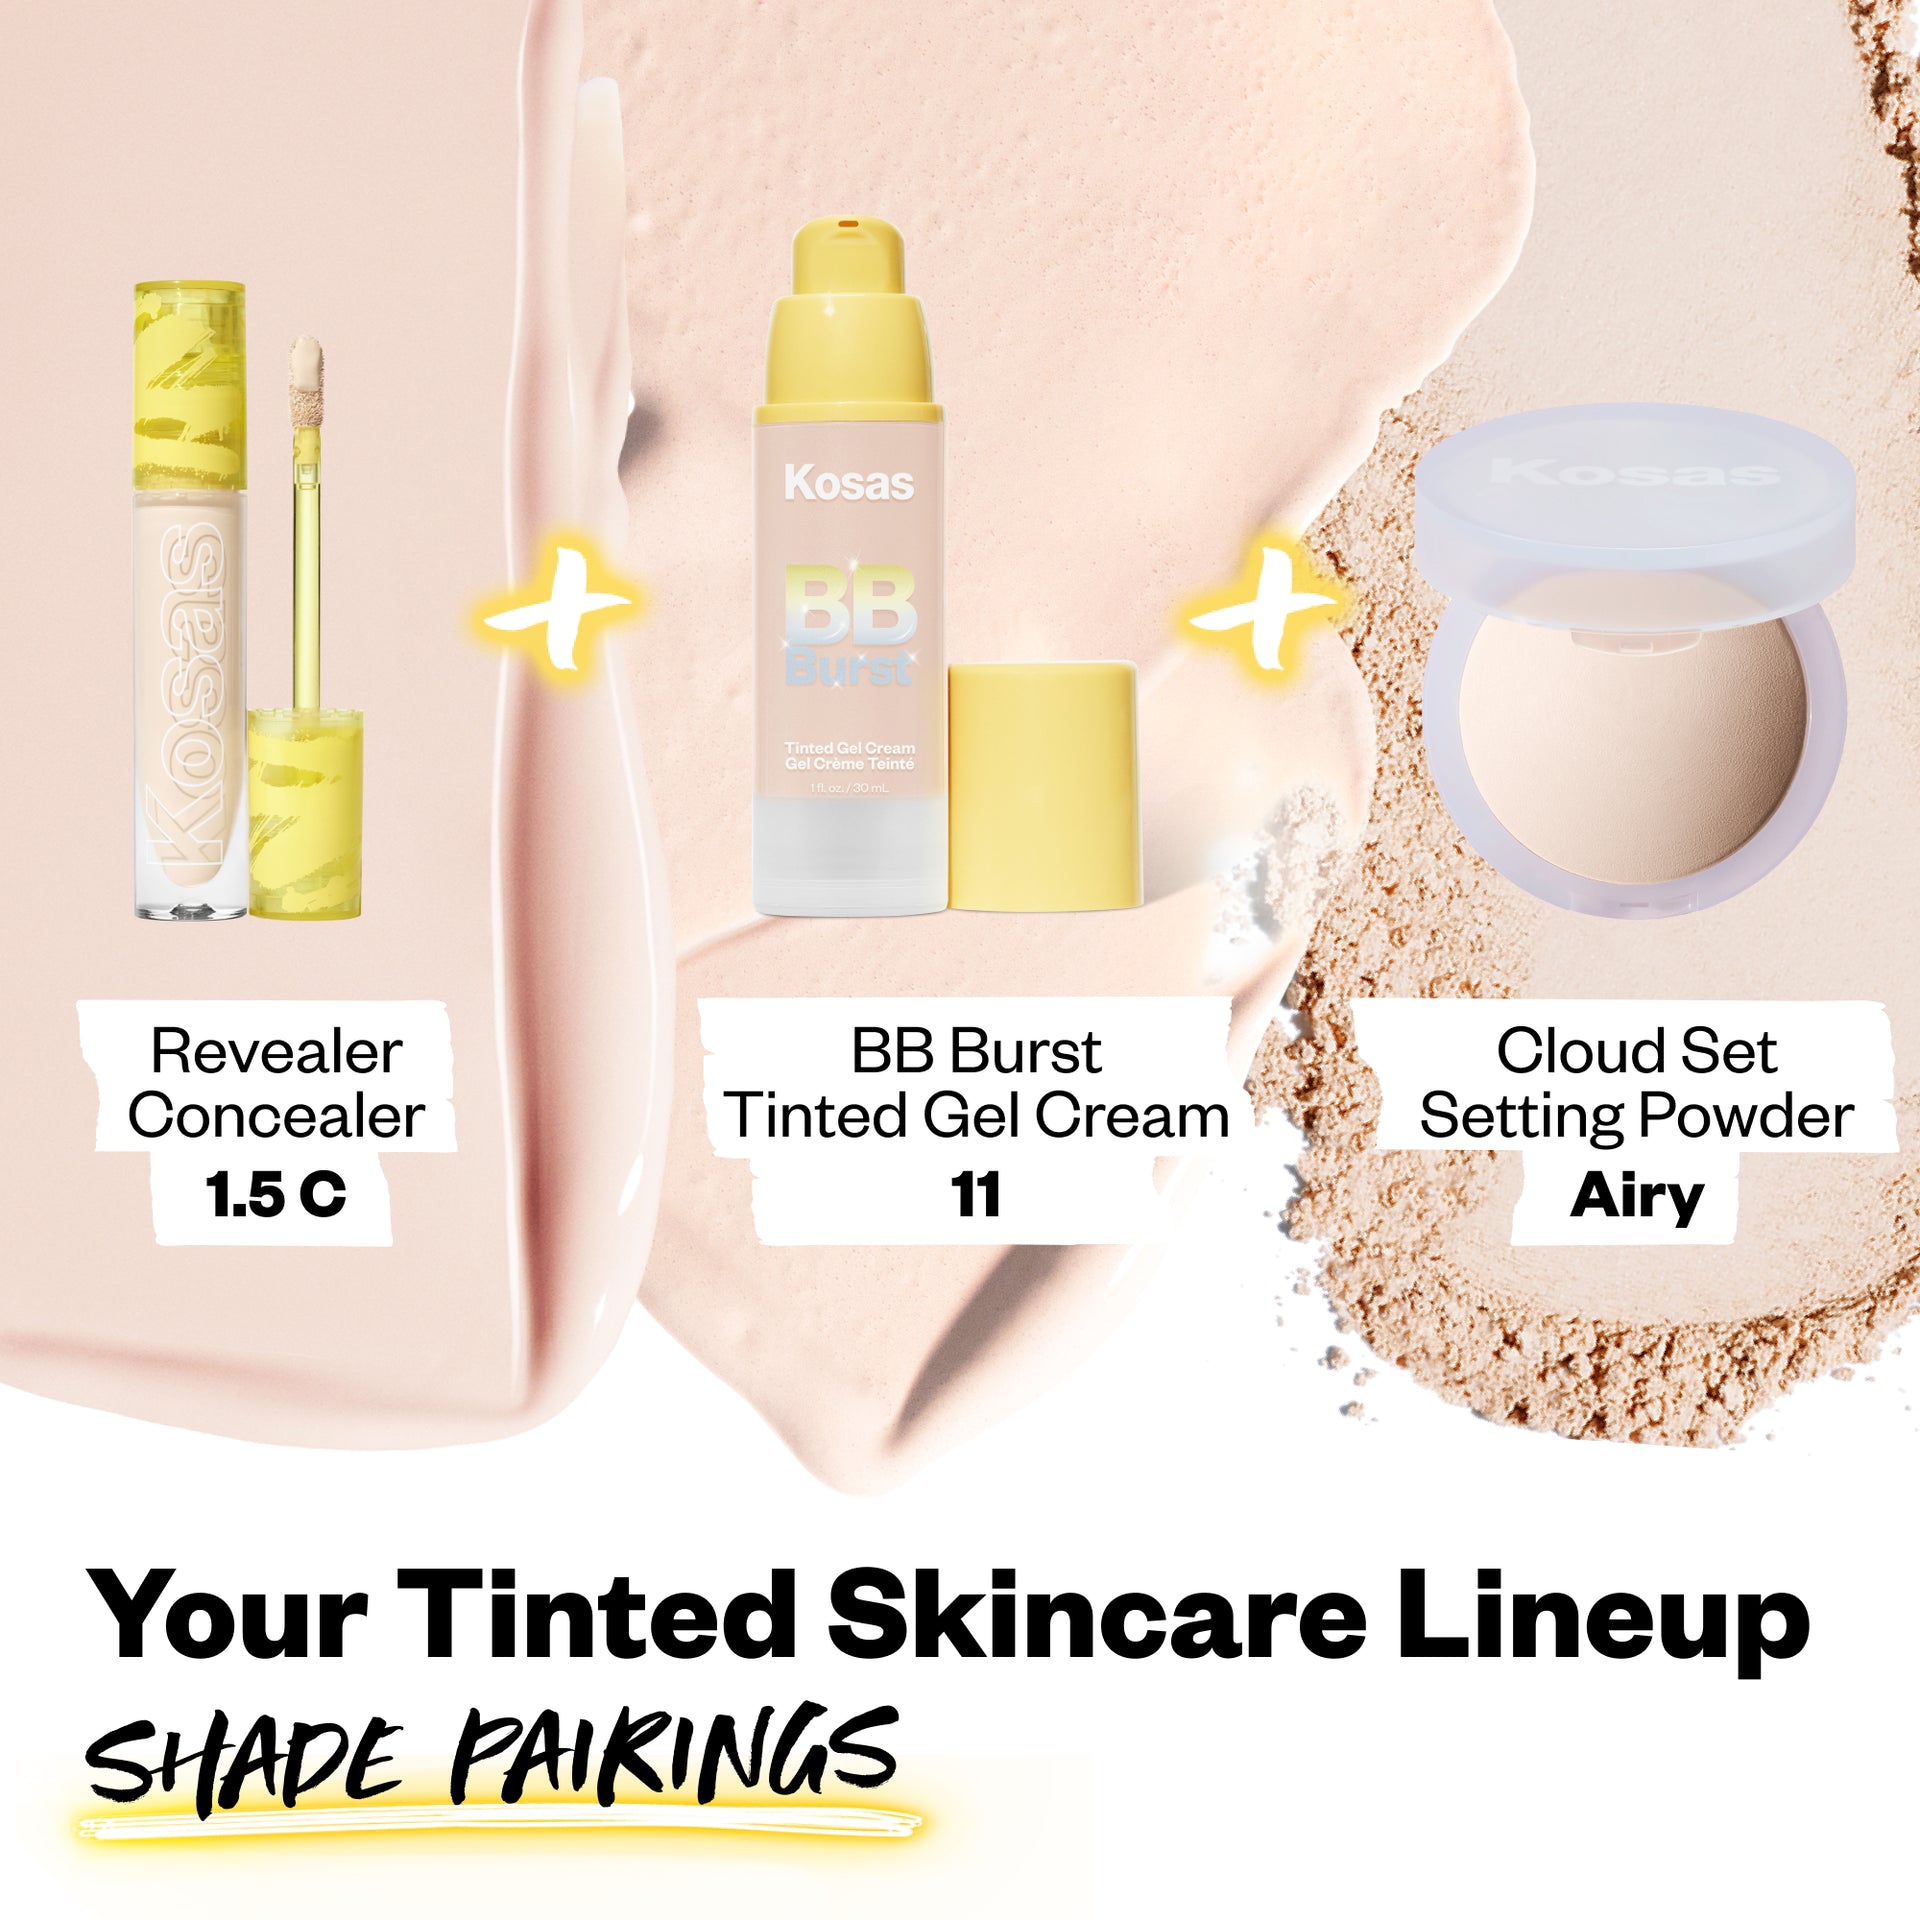 Your Tinted Skincare Lineup Shade Pairings (Revealer Concealer 1.5N, BB Burst Tinted Gel Cream 11, Cloud Set Setting Powder Airy)